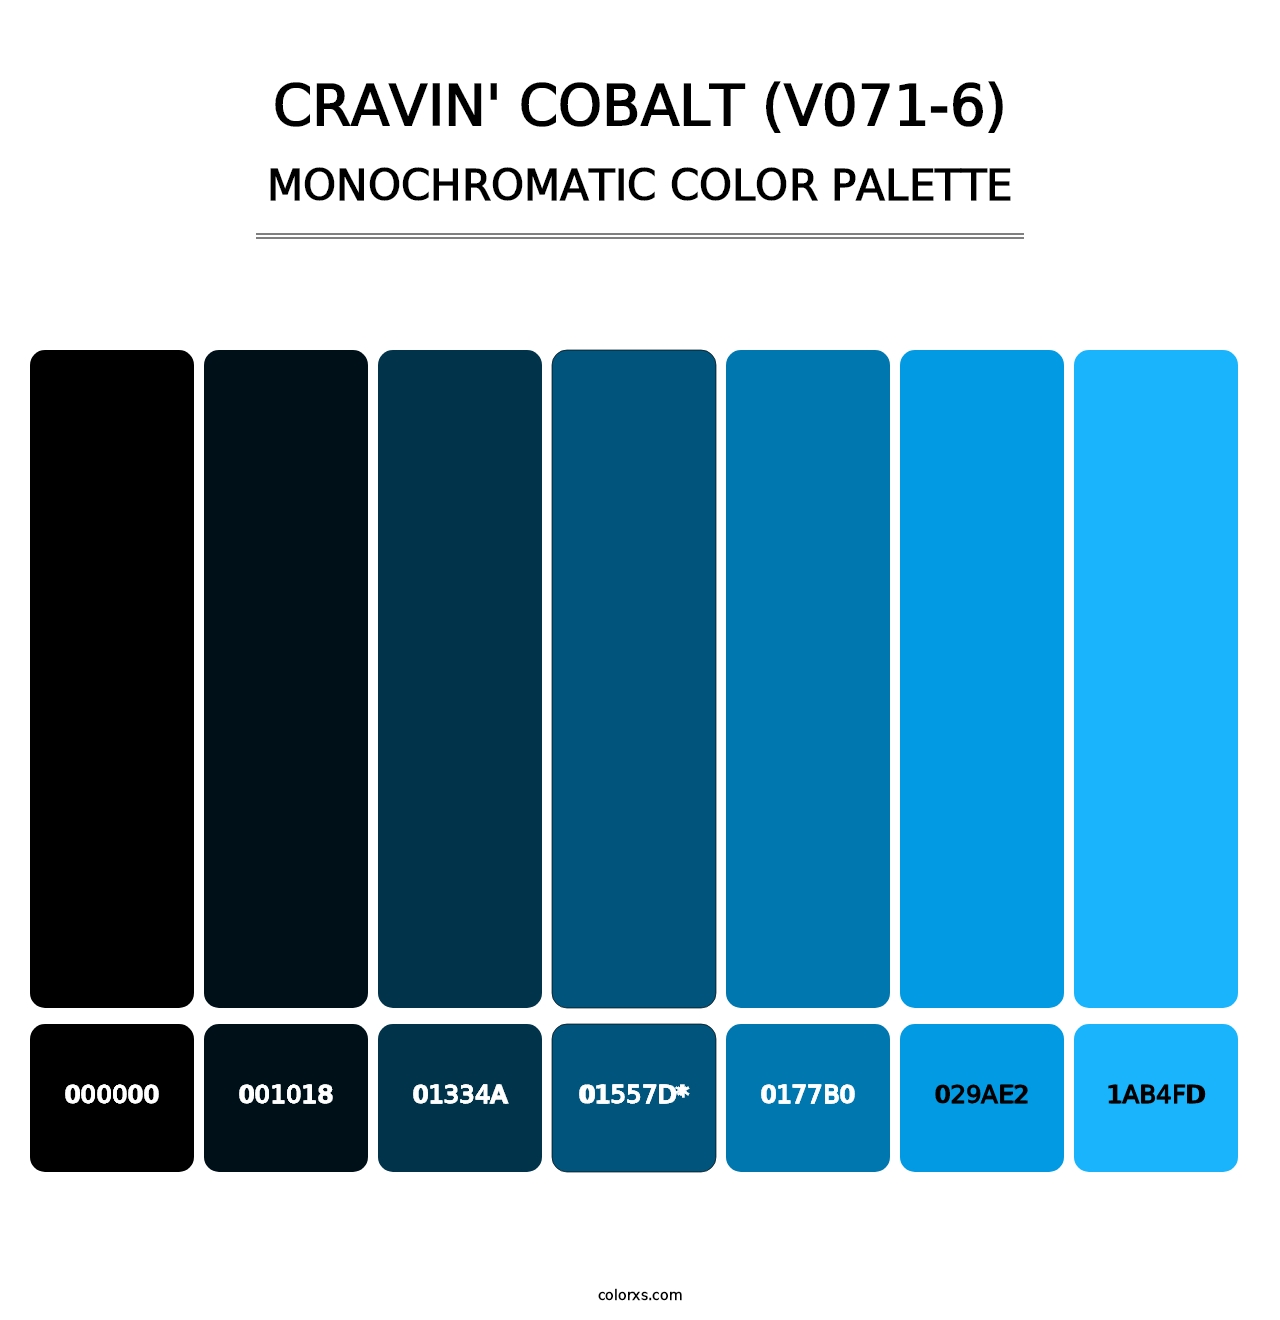 Cravin' Cobalt (V071-6) - Monochromatic Color Palette